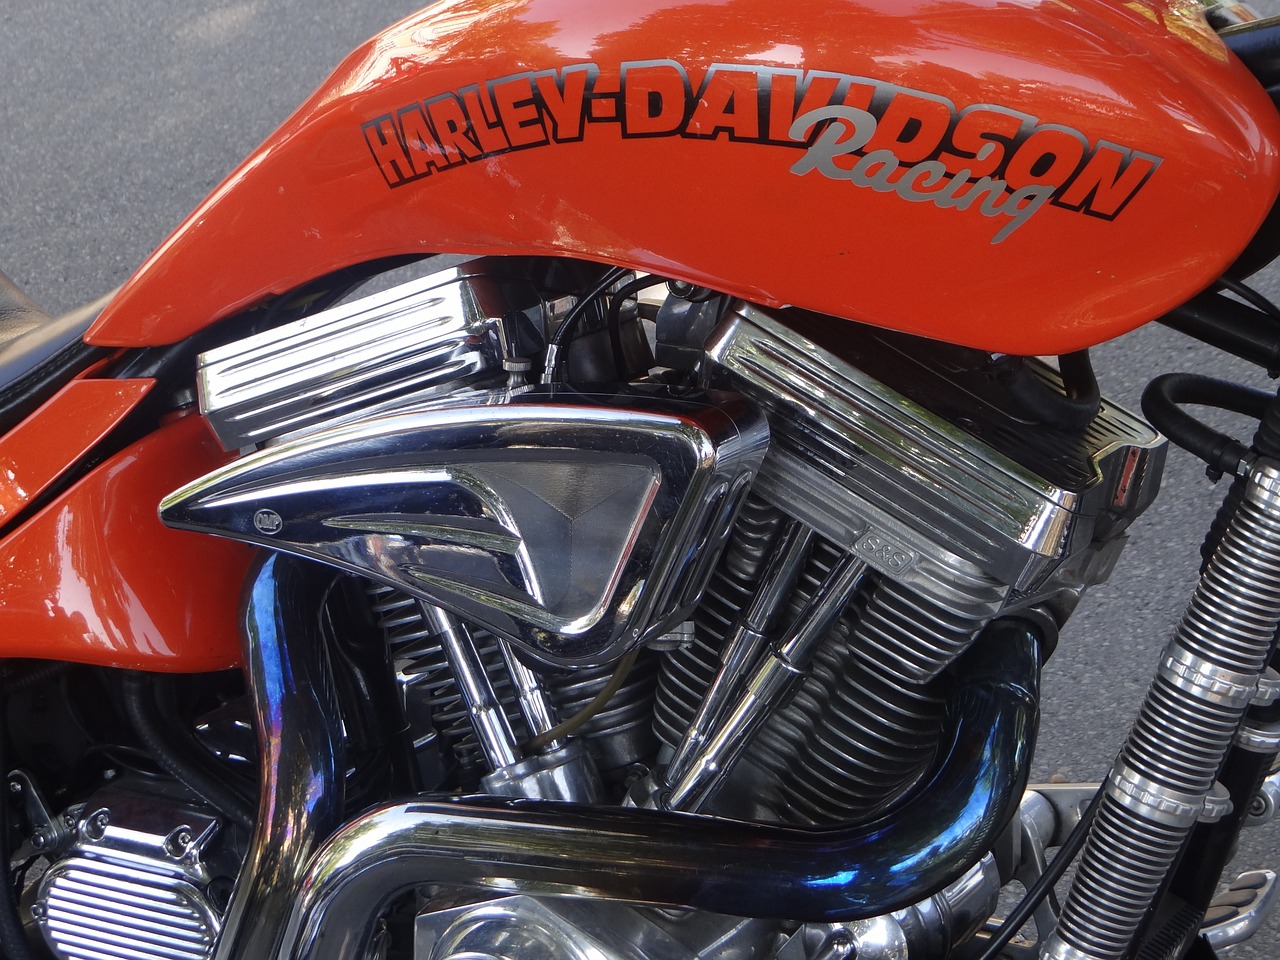 harley davidson motorcycle chrome free photo